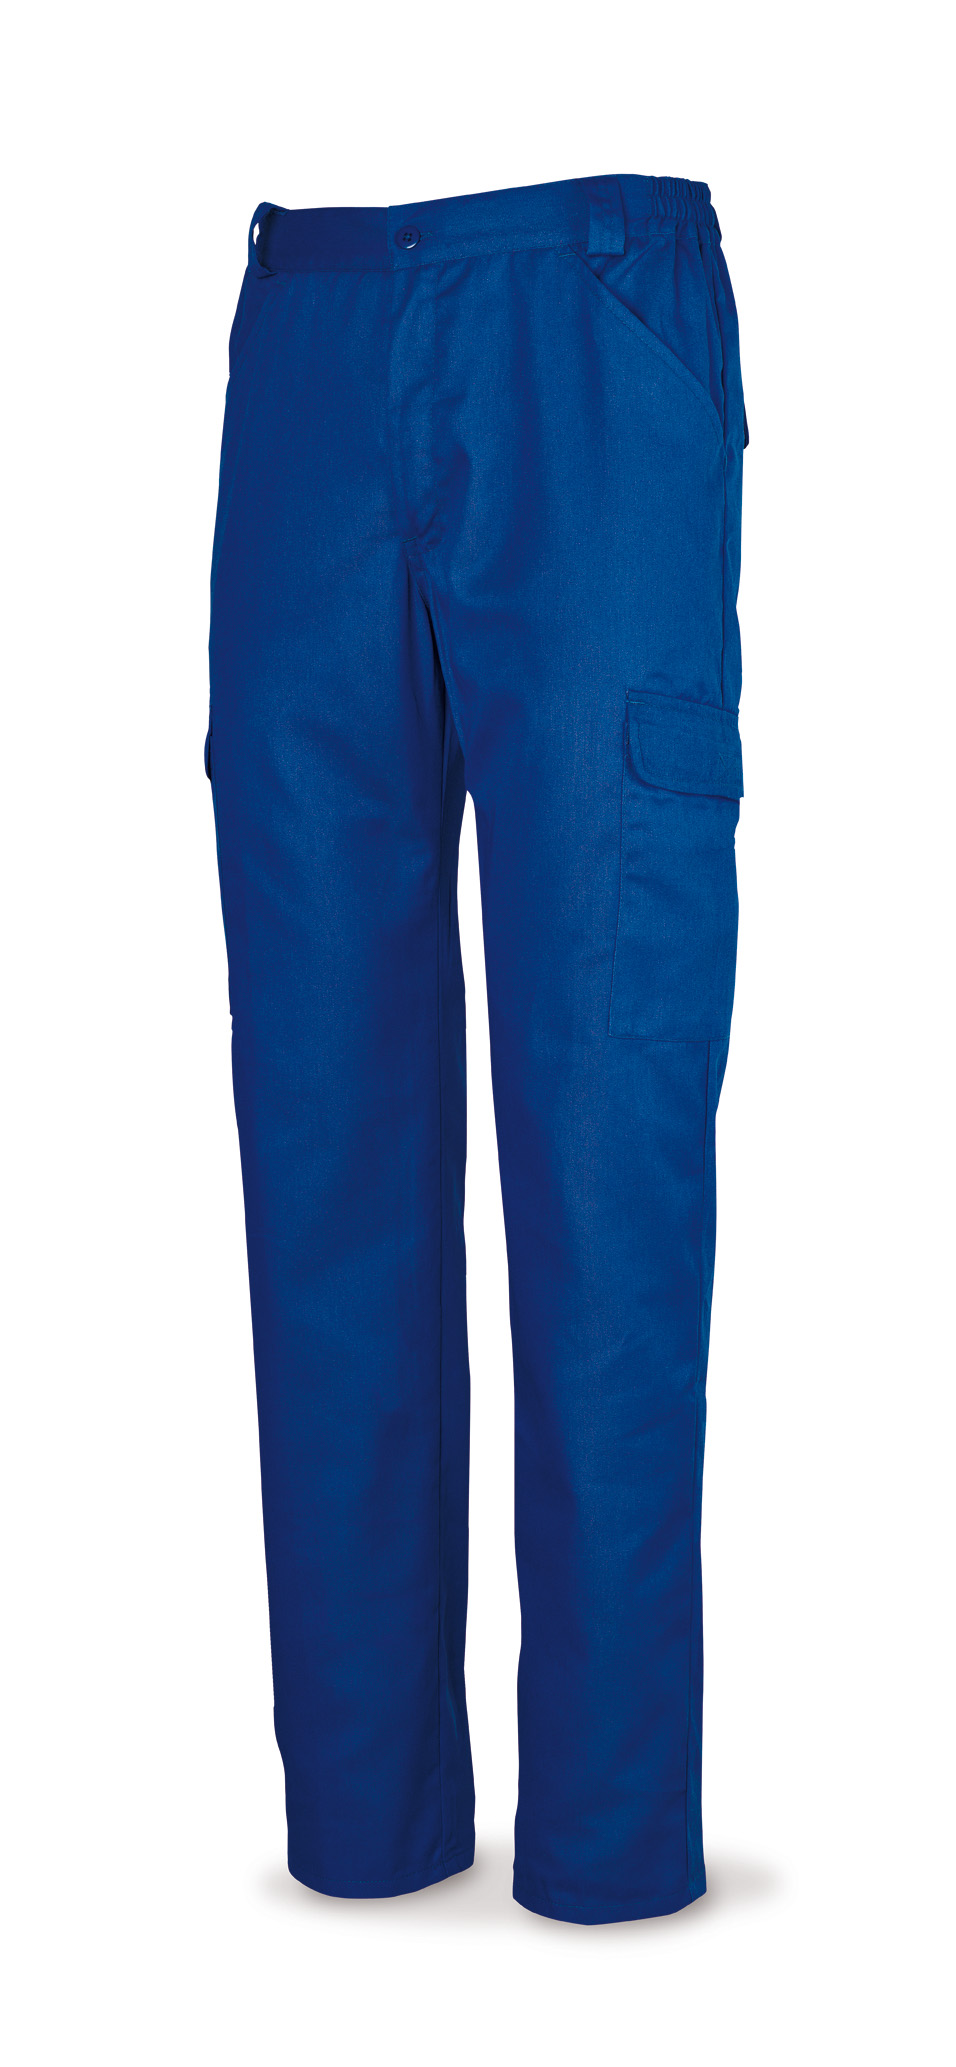 388-P Workwear Basic Line Tergal. Royal blue.